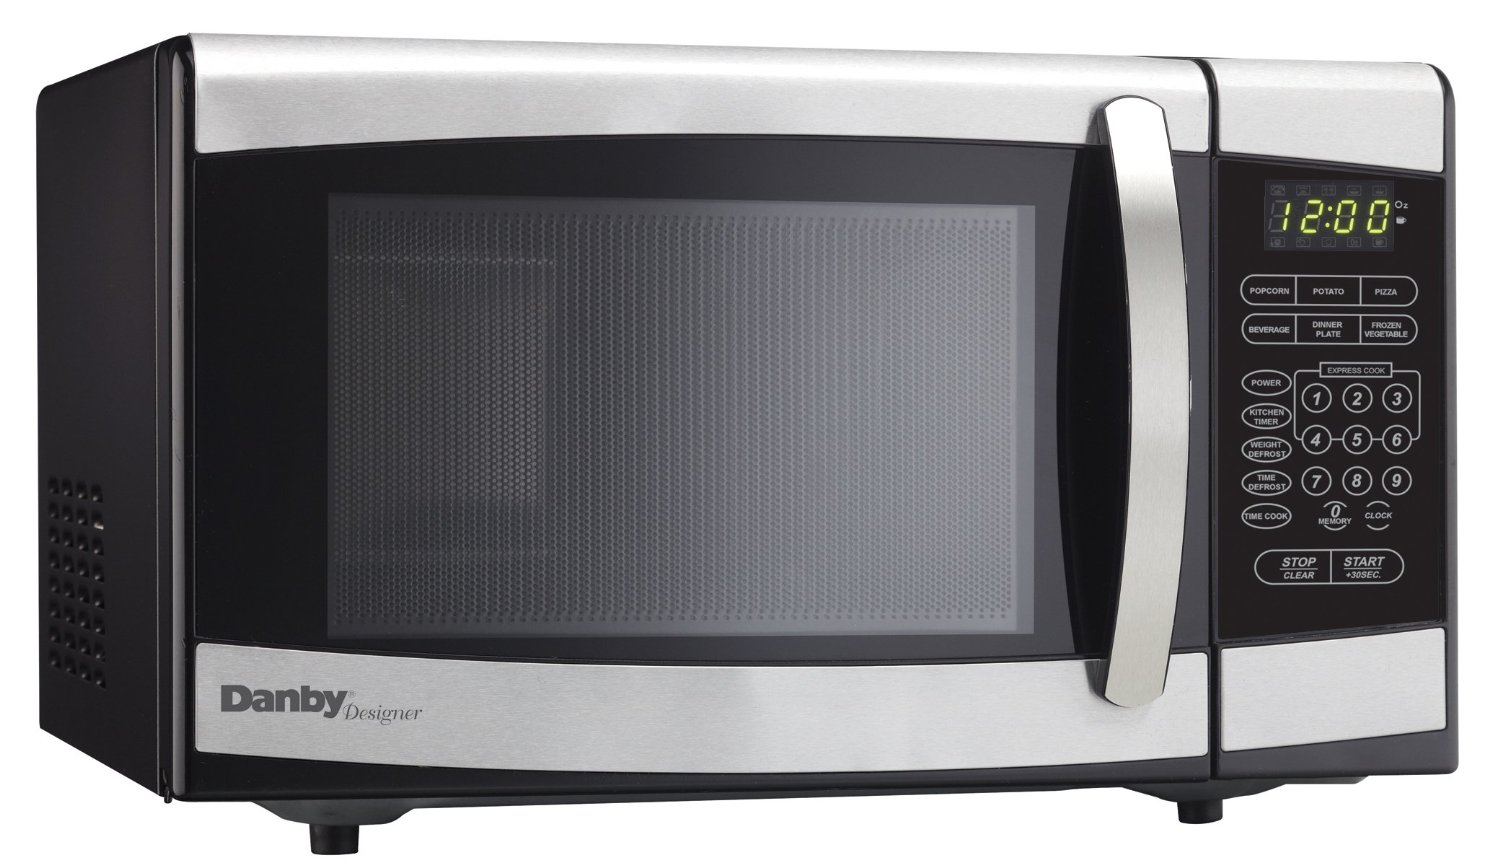 Danby Designer microwave